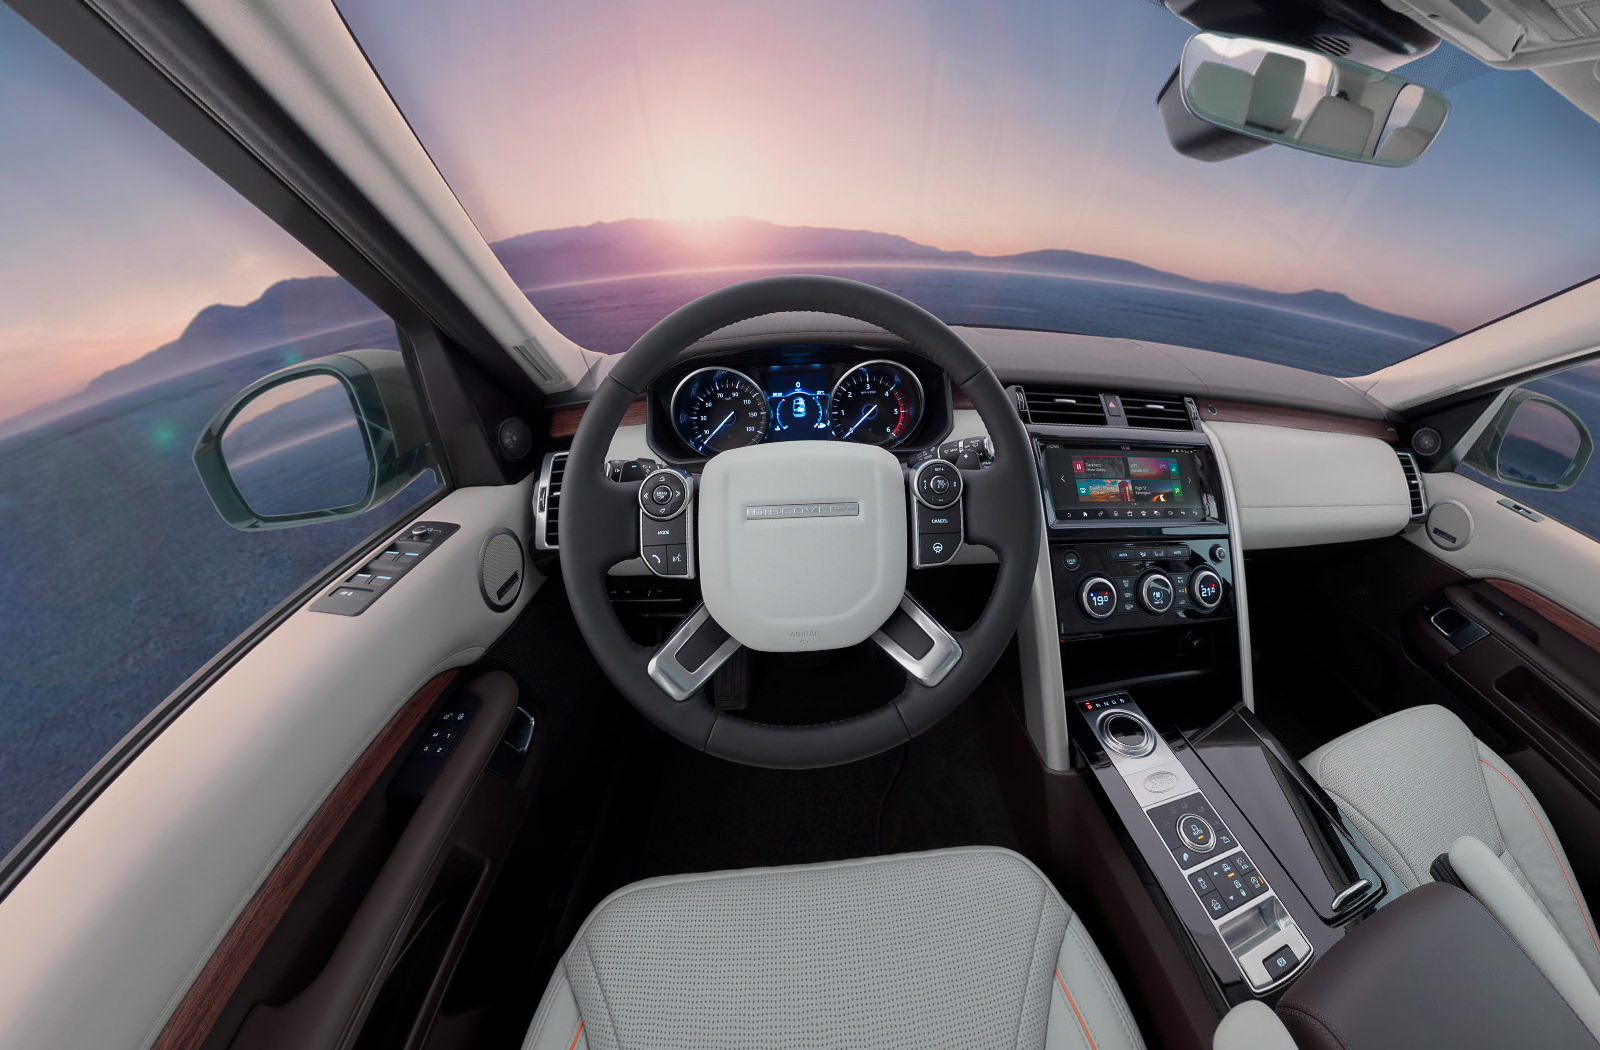 Car 360 - New Land Rover Discovery Interior - eyerevolution